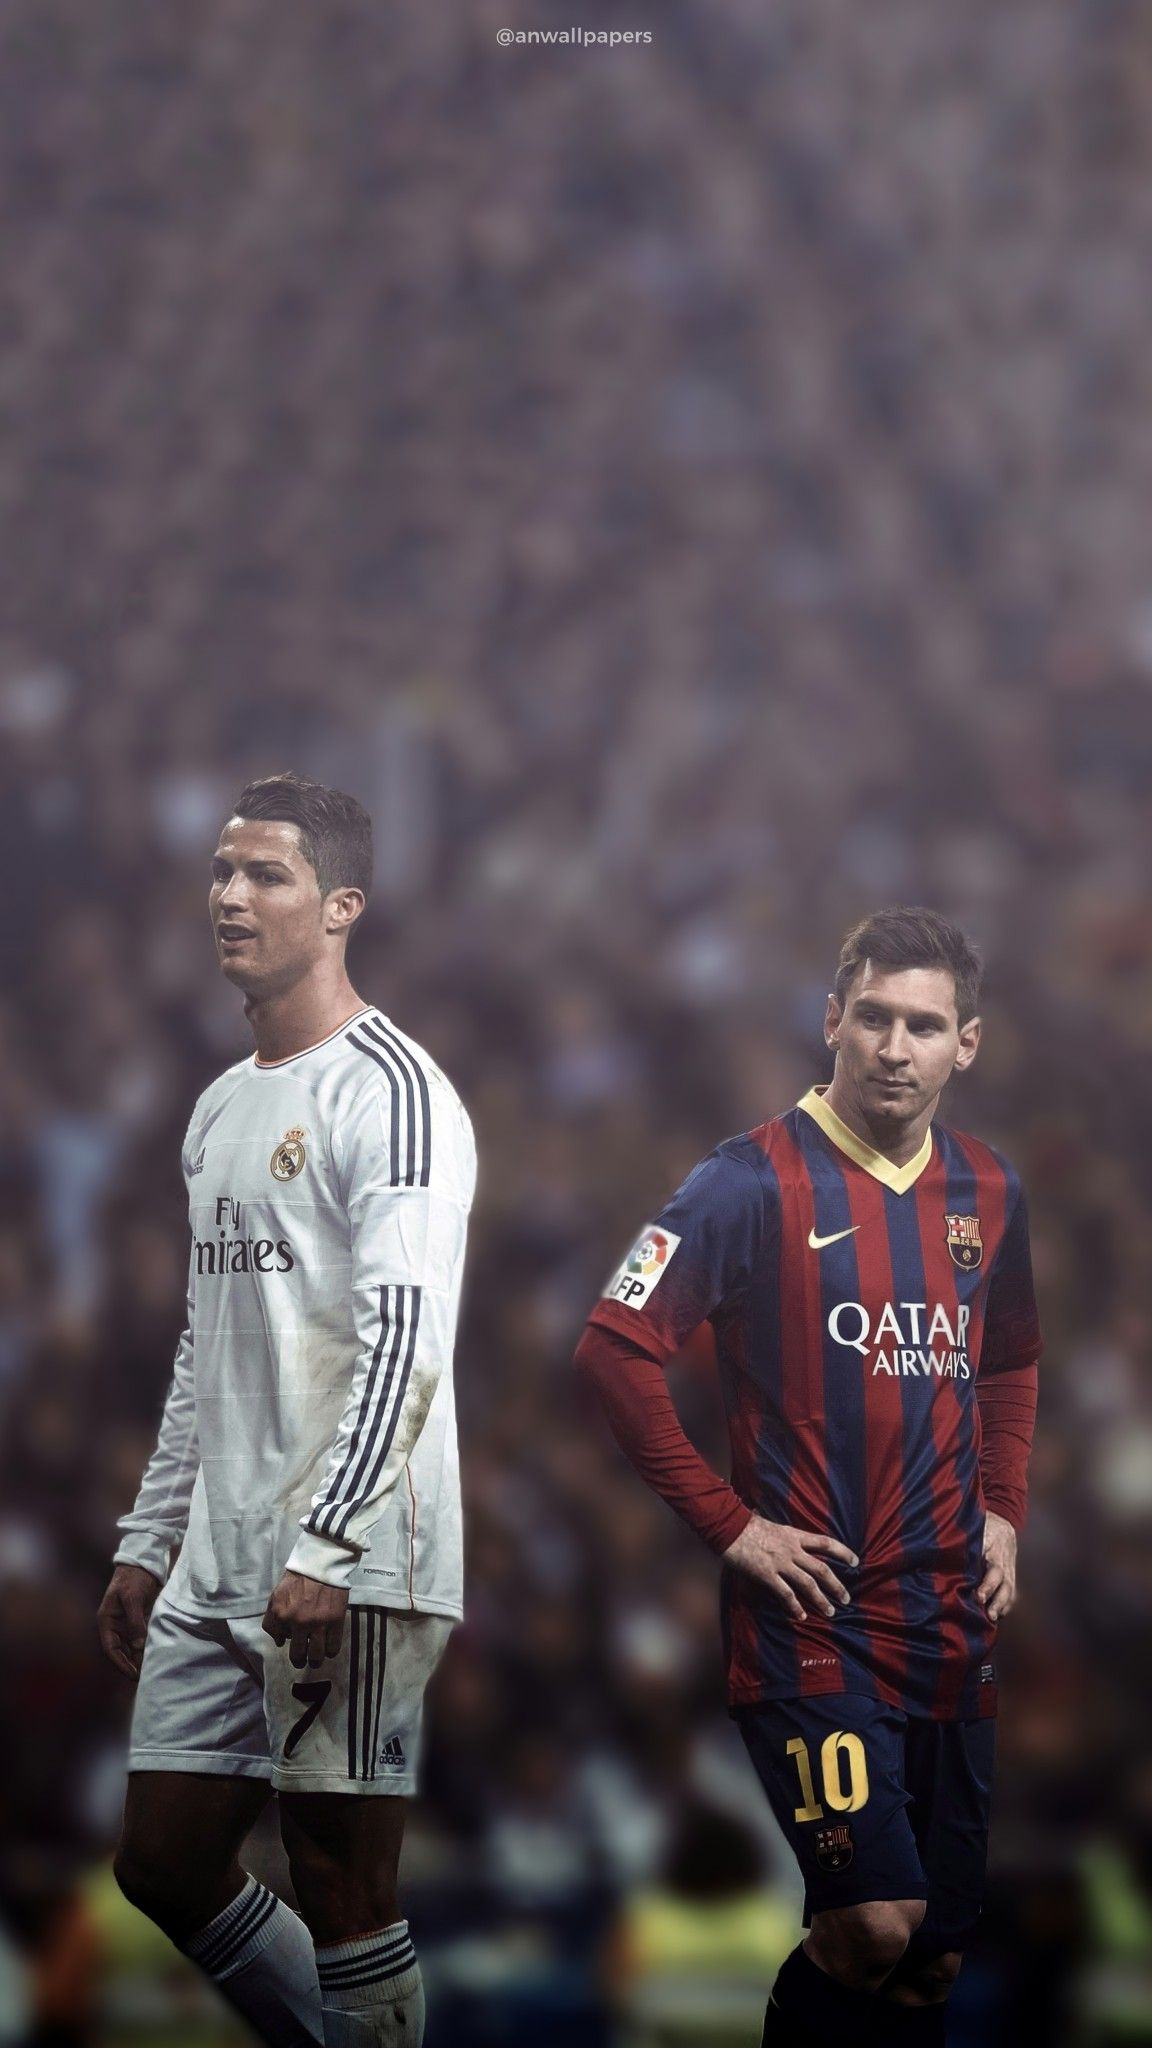 Cristiano Ronaldo and Messi wallpaper. Fotos de fútbol, Camiseta de messi, Cristiano vs messi